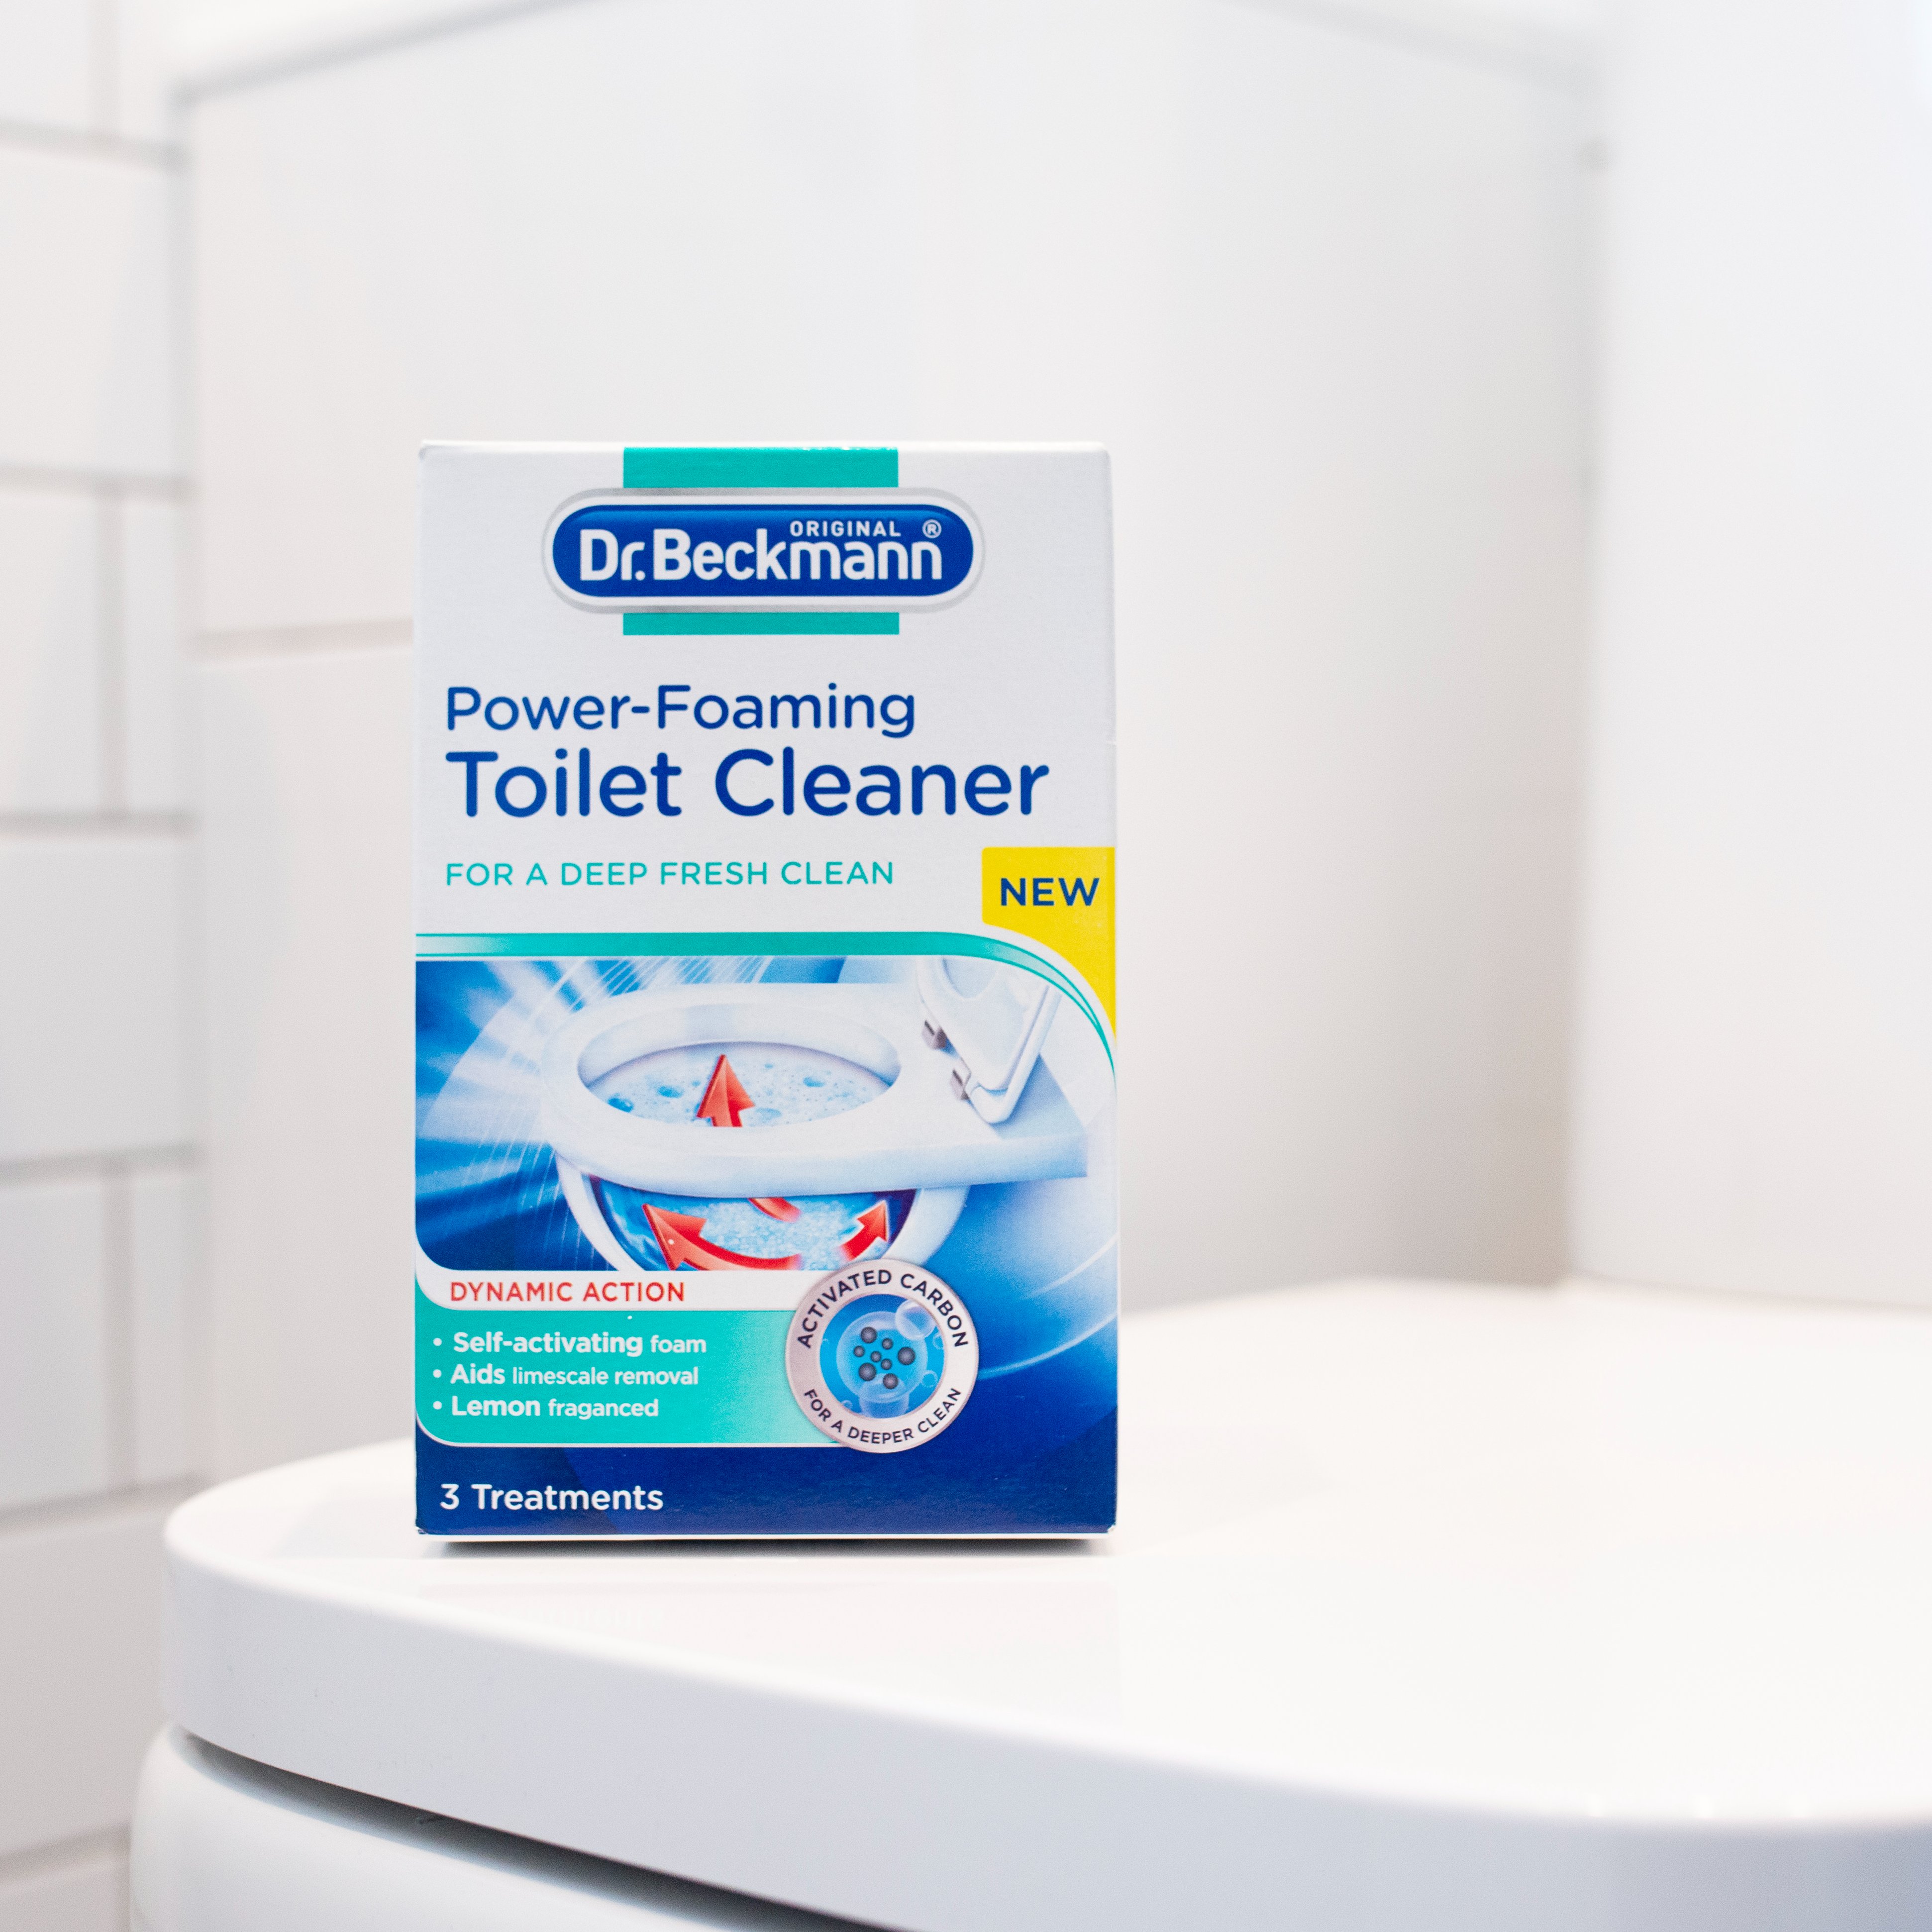 Dr Beckmann on Twitter: "Foam up your bathroom clean routine🤩🚽  #drbeckmann https://t.co/Dtd4rG0DVH" / Twitter